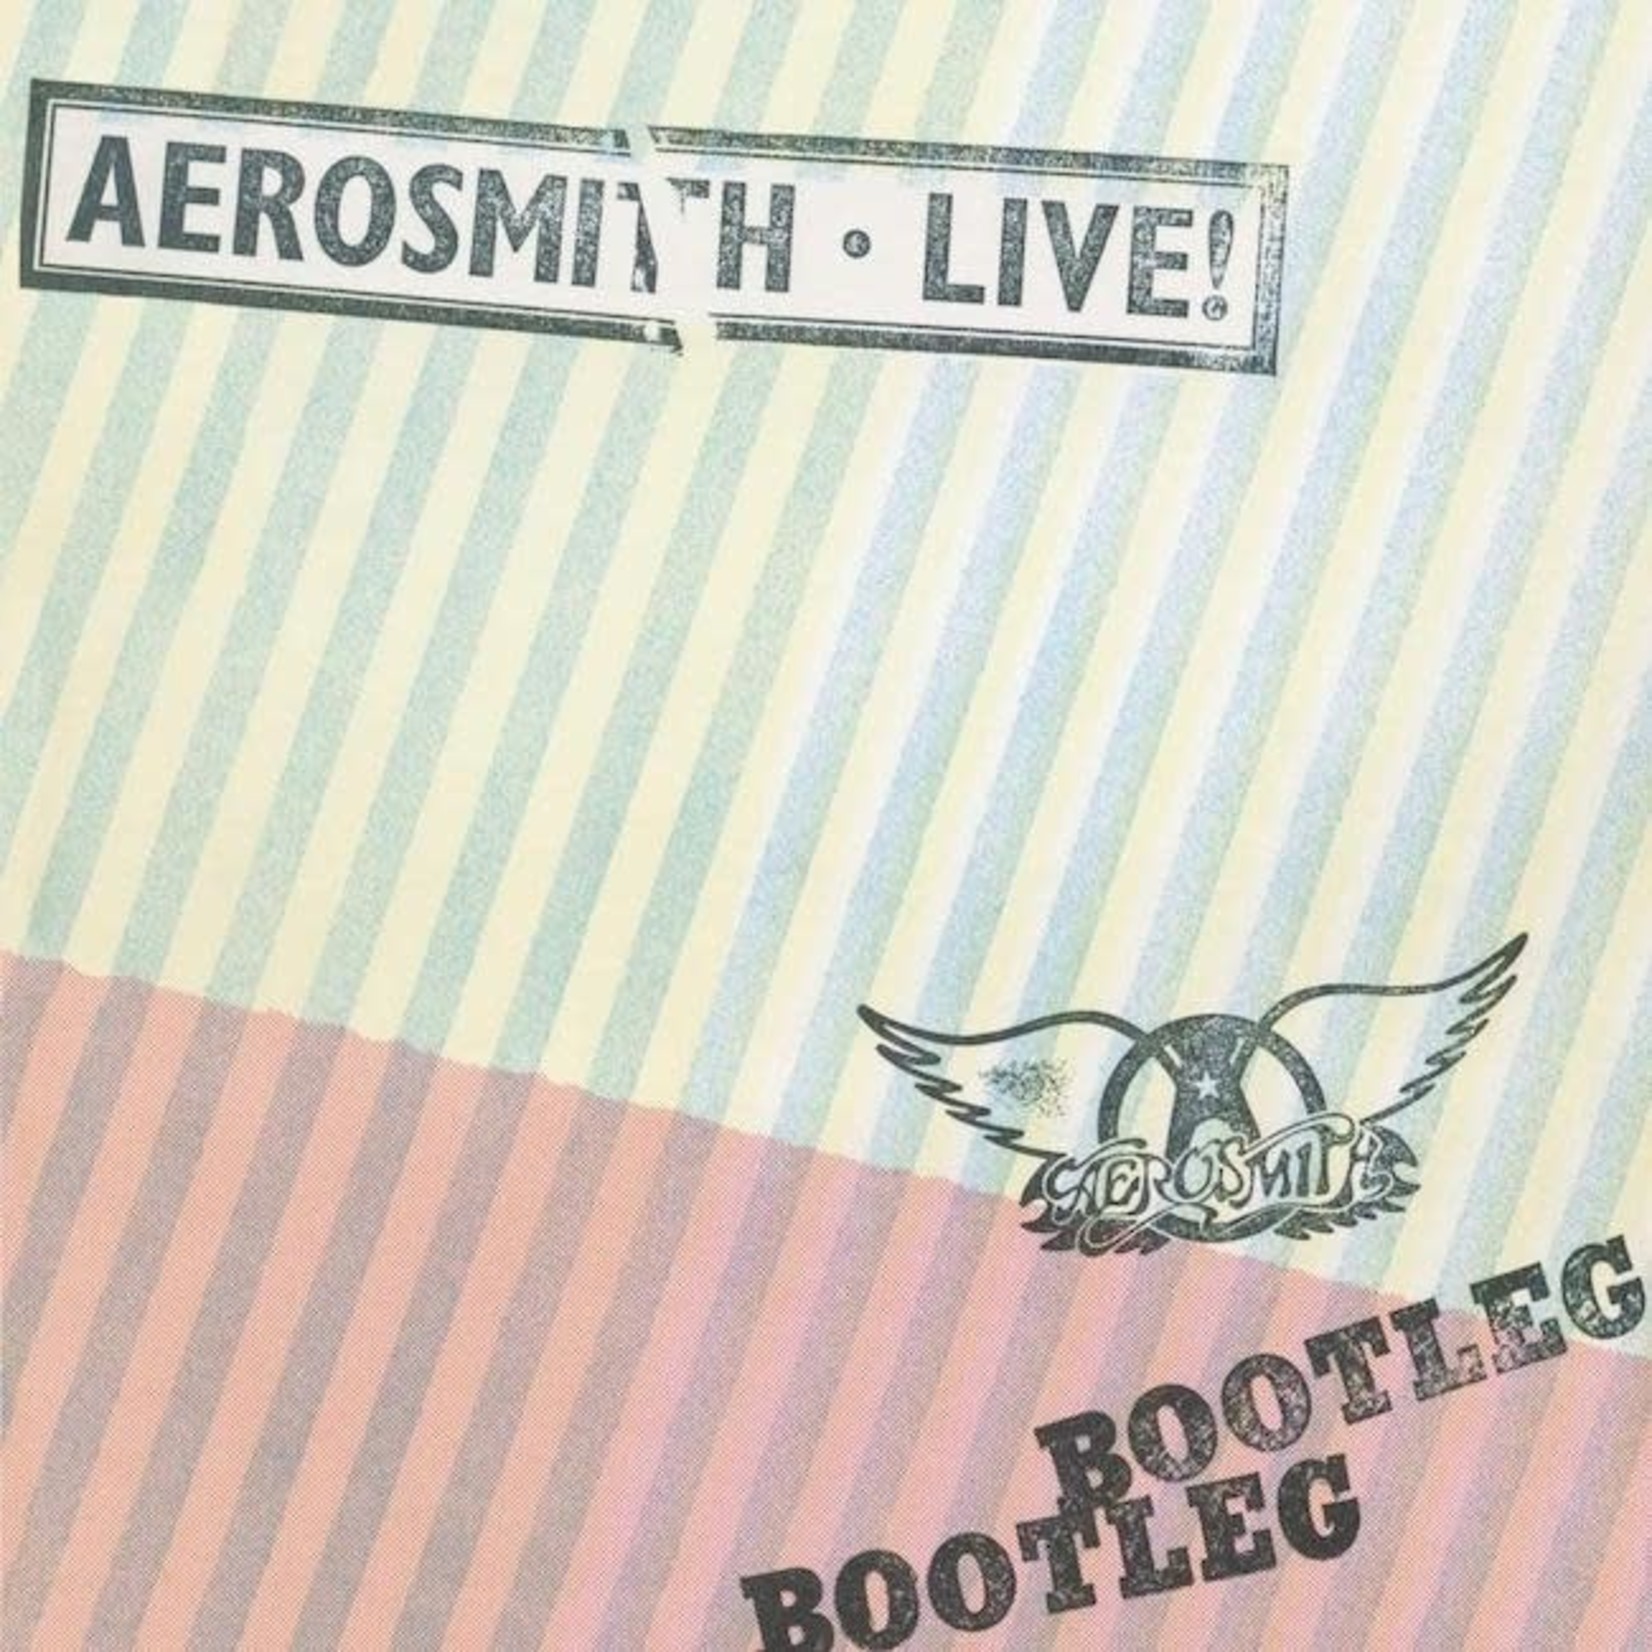 [Vintage] Aerosmith - Live